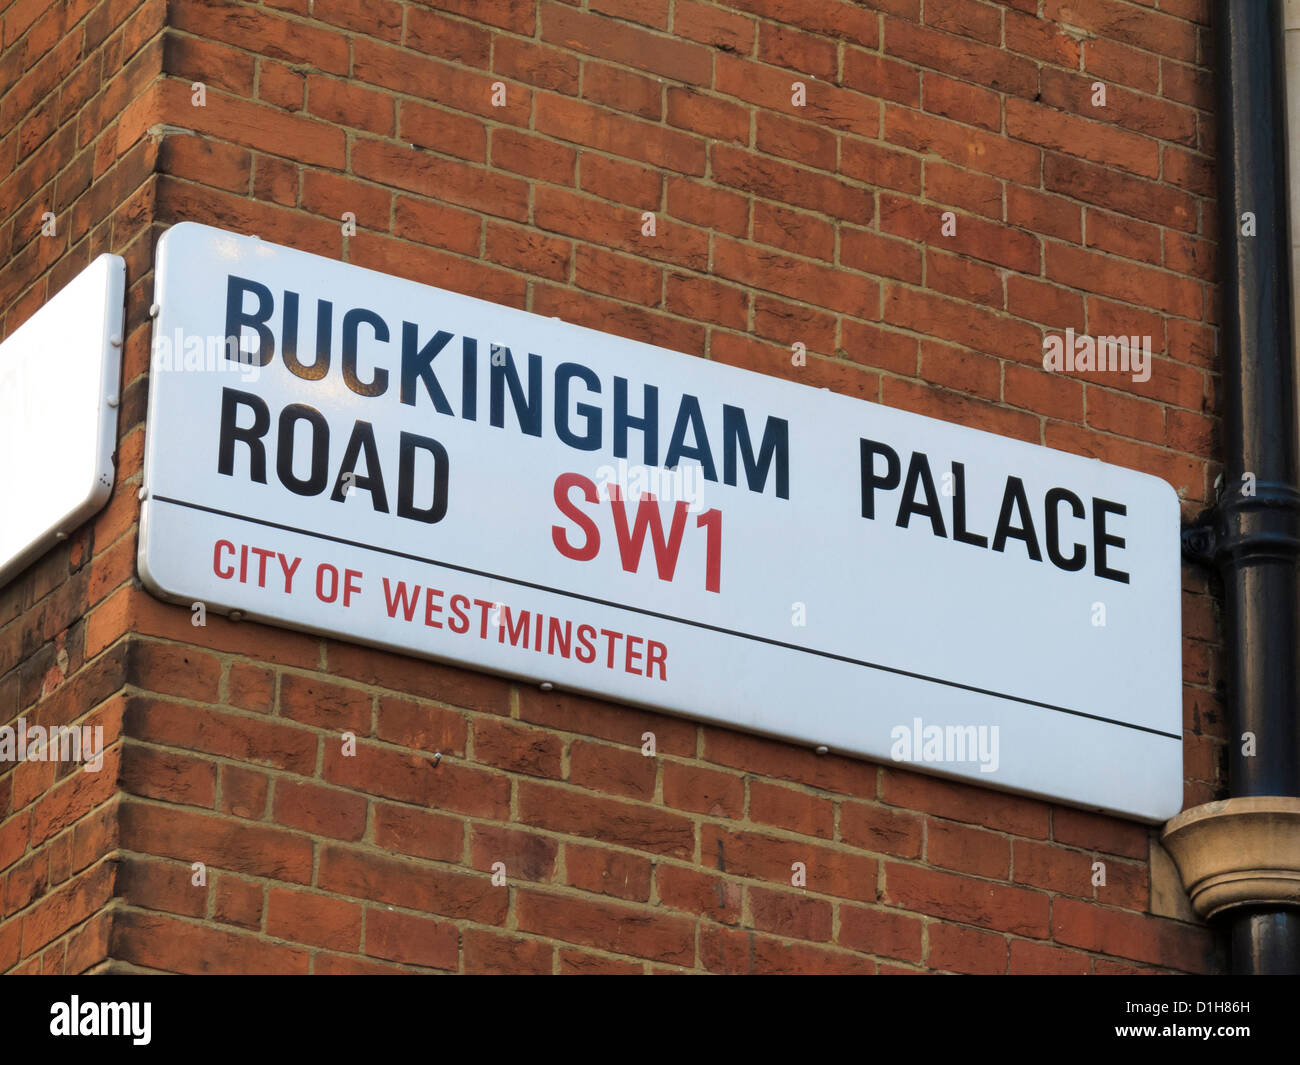 Buckingham Palace Road City of Westminster London SW1 England Stock Photo